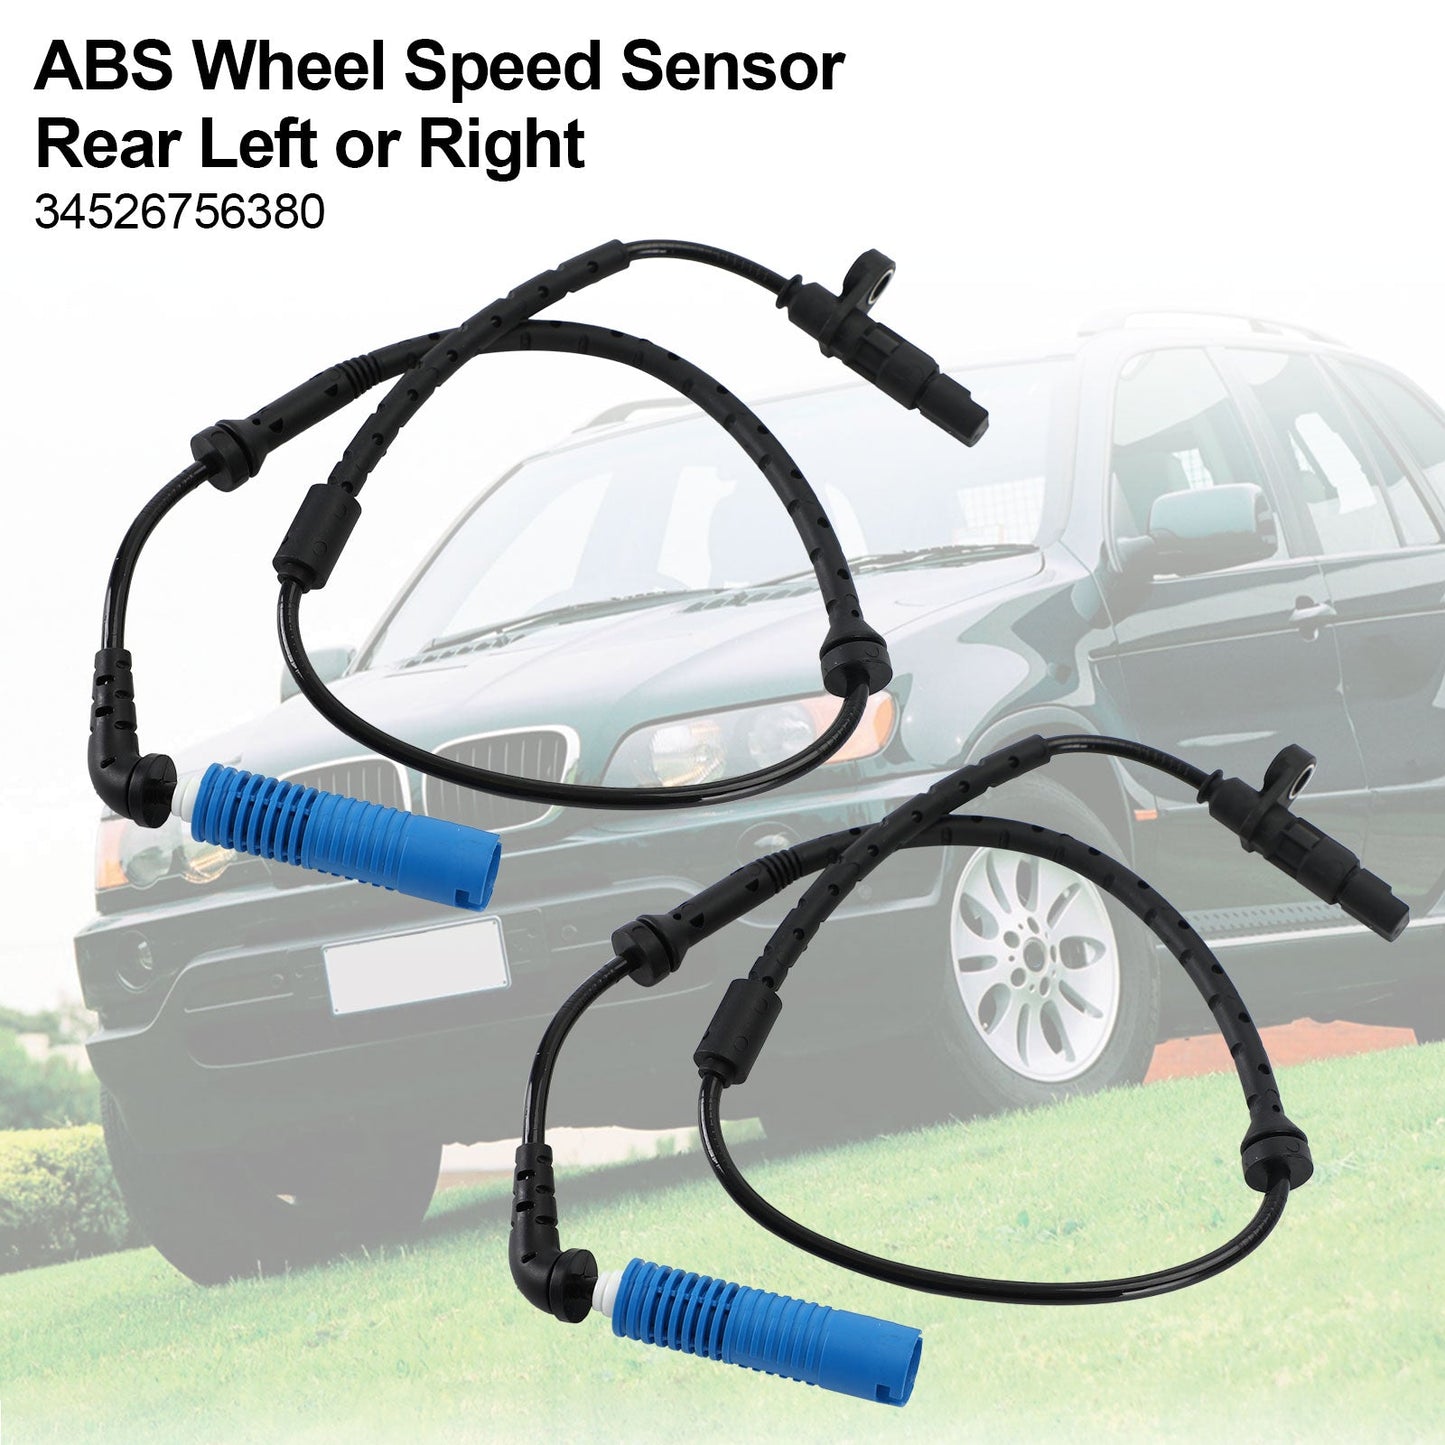 2pcs ABS Wheel Speed Sensor Rear Left&Right for BMW E53 X5 2000-2006 34526756380